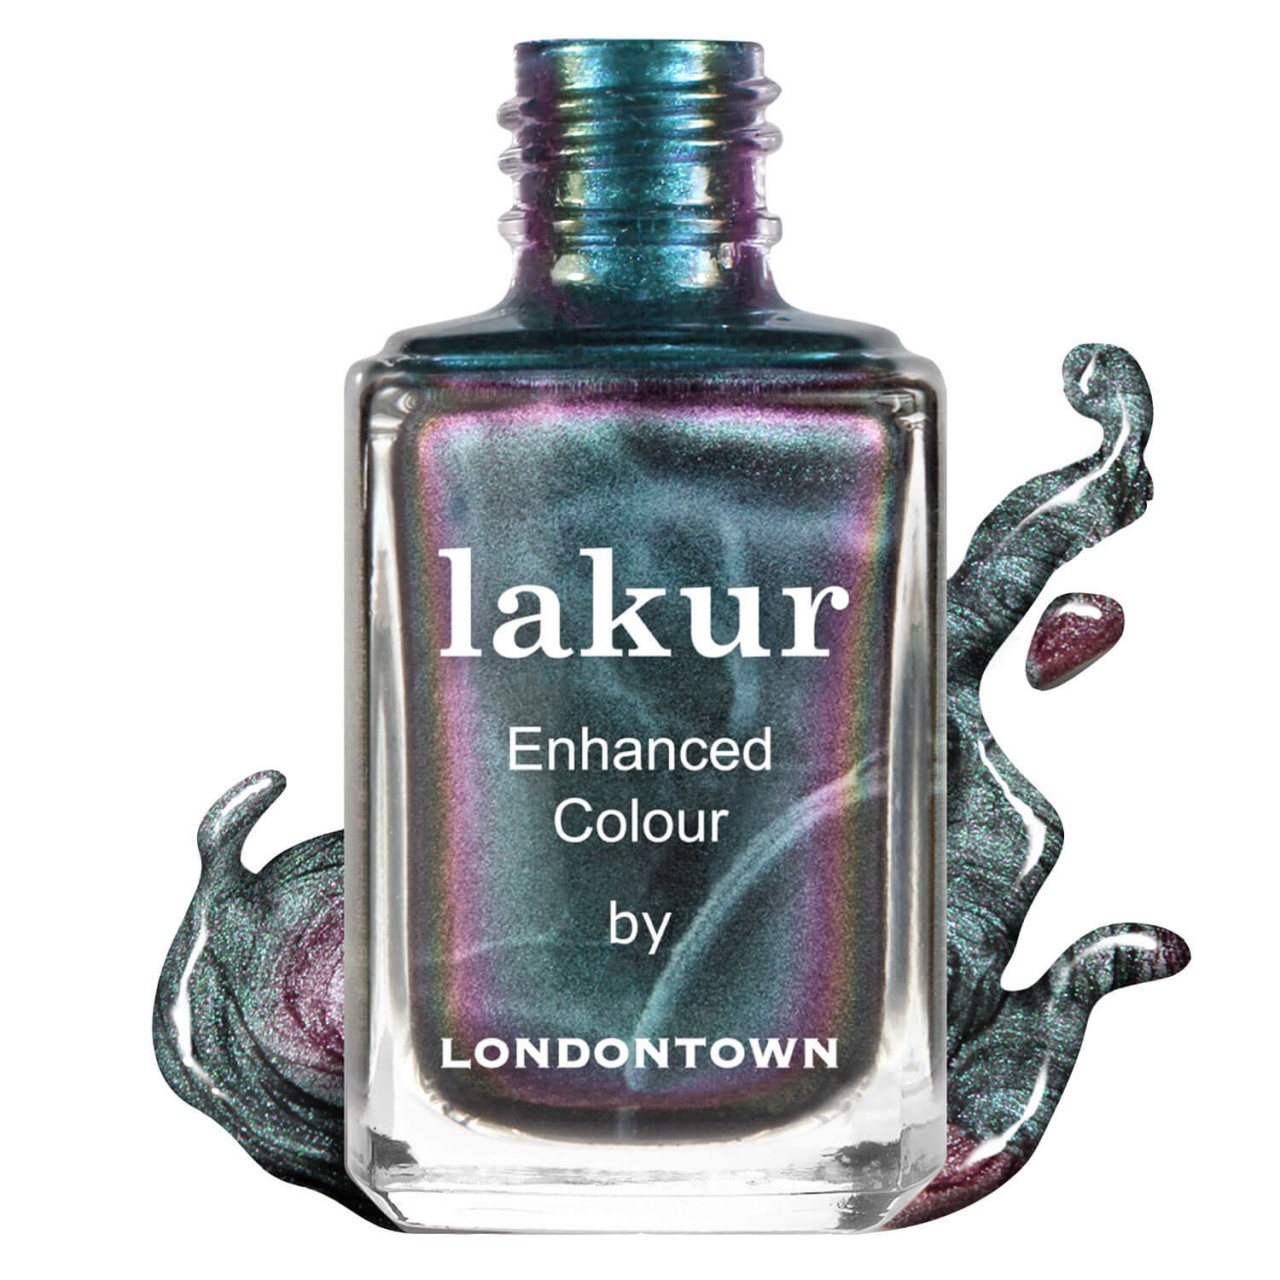 lakur - Skyline Reflect von Londontown